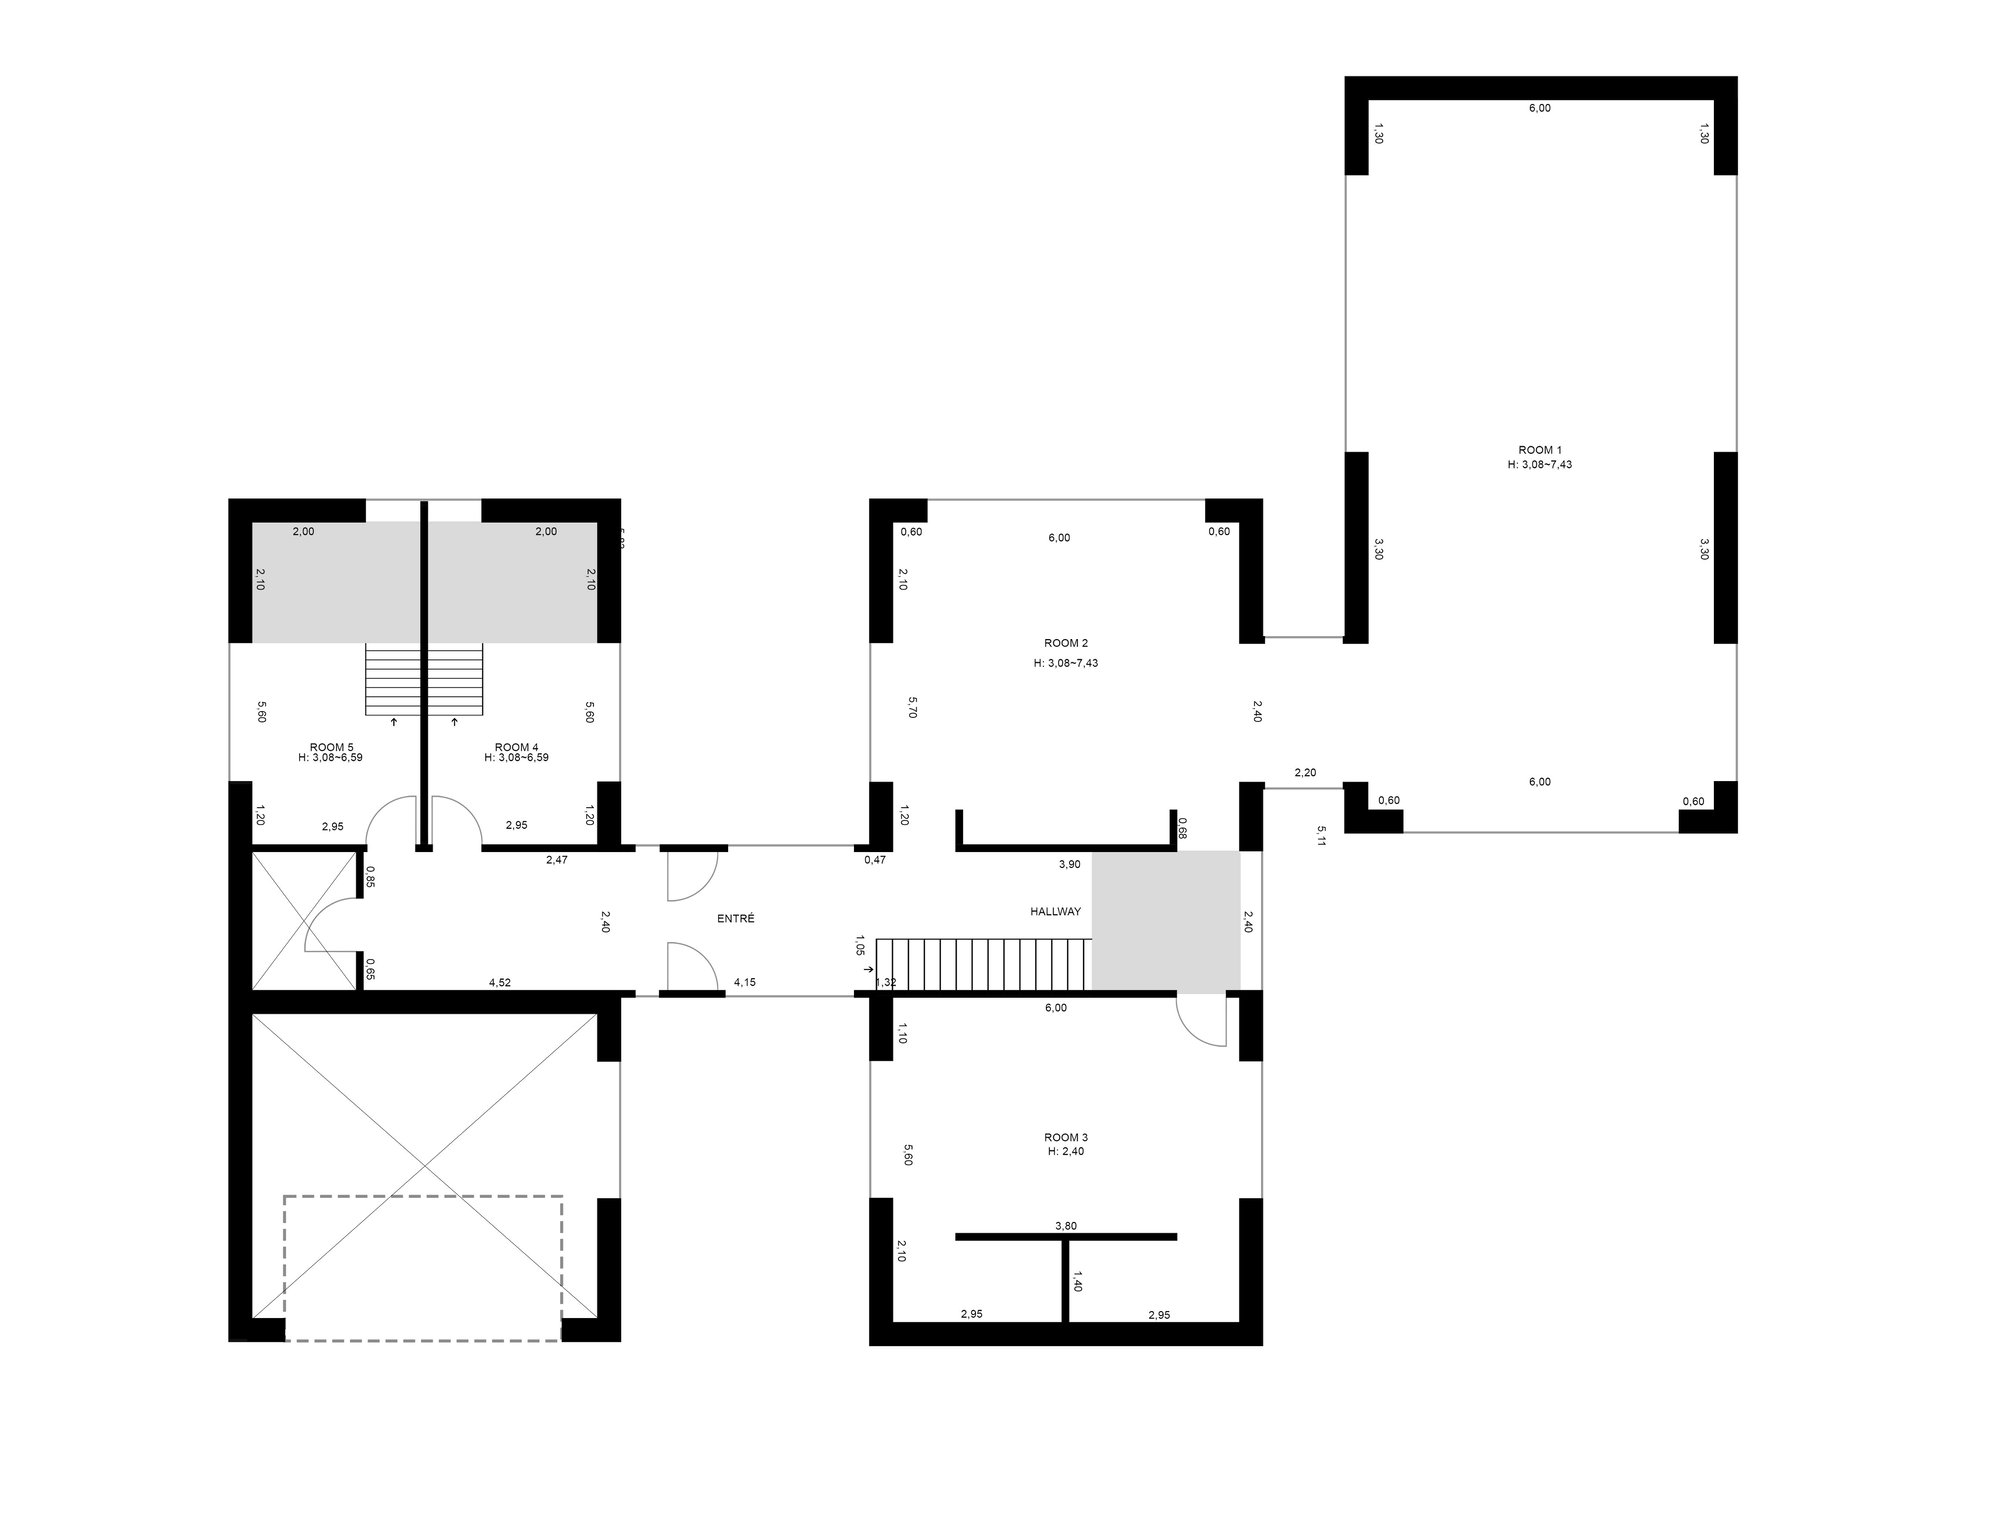 Location_11_Floorplan